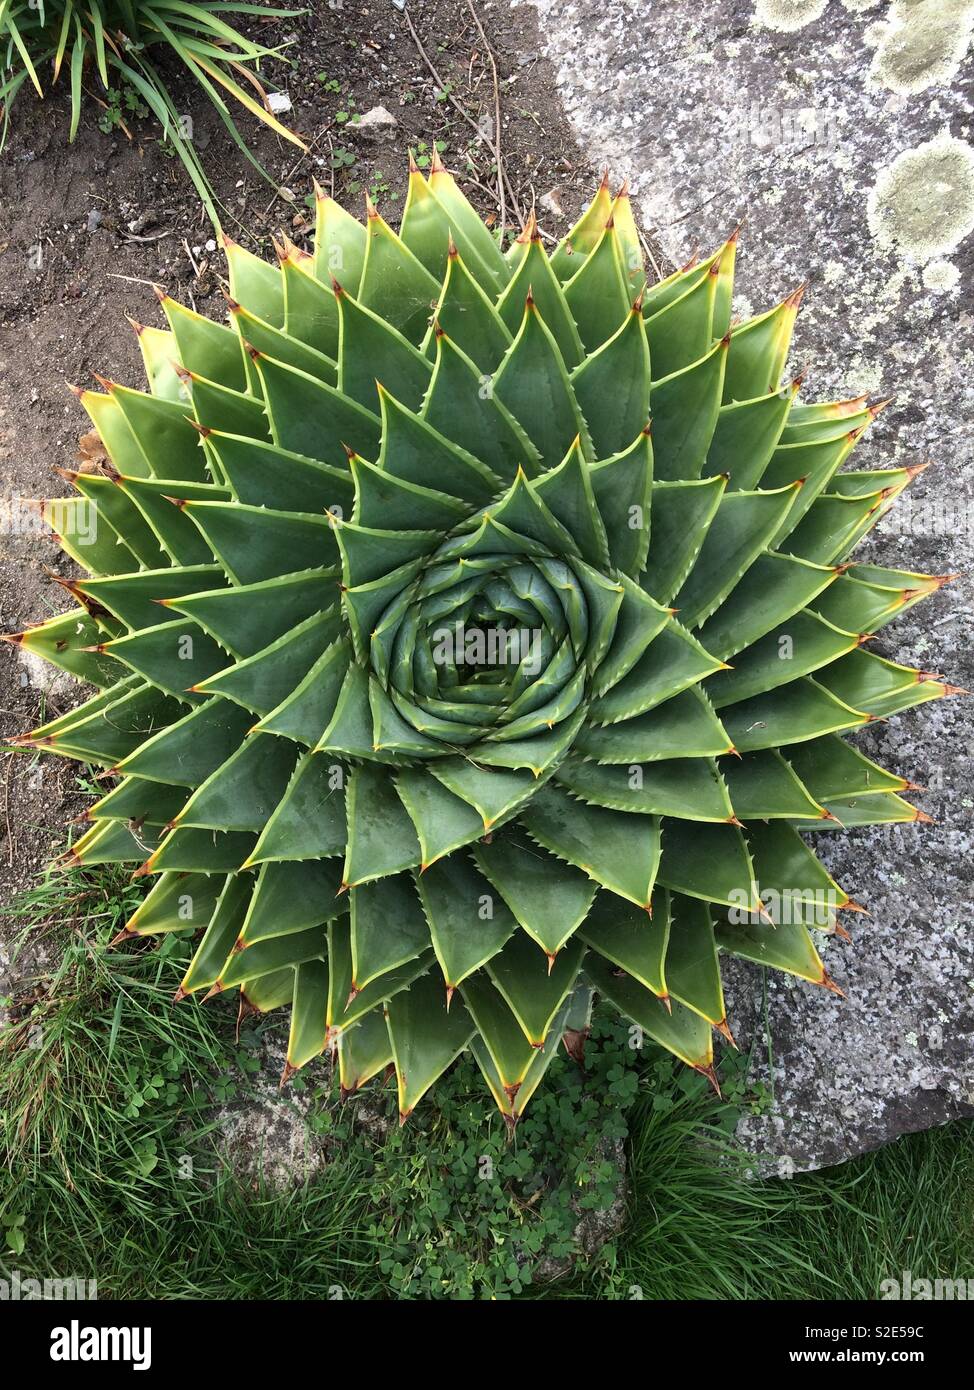 Nature’s “golden ratio” cactus plant Stock Photo